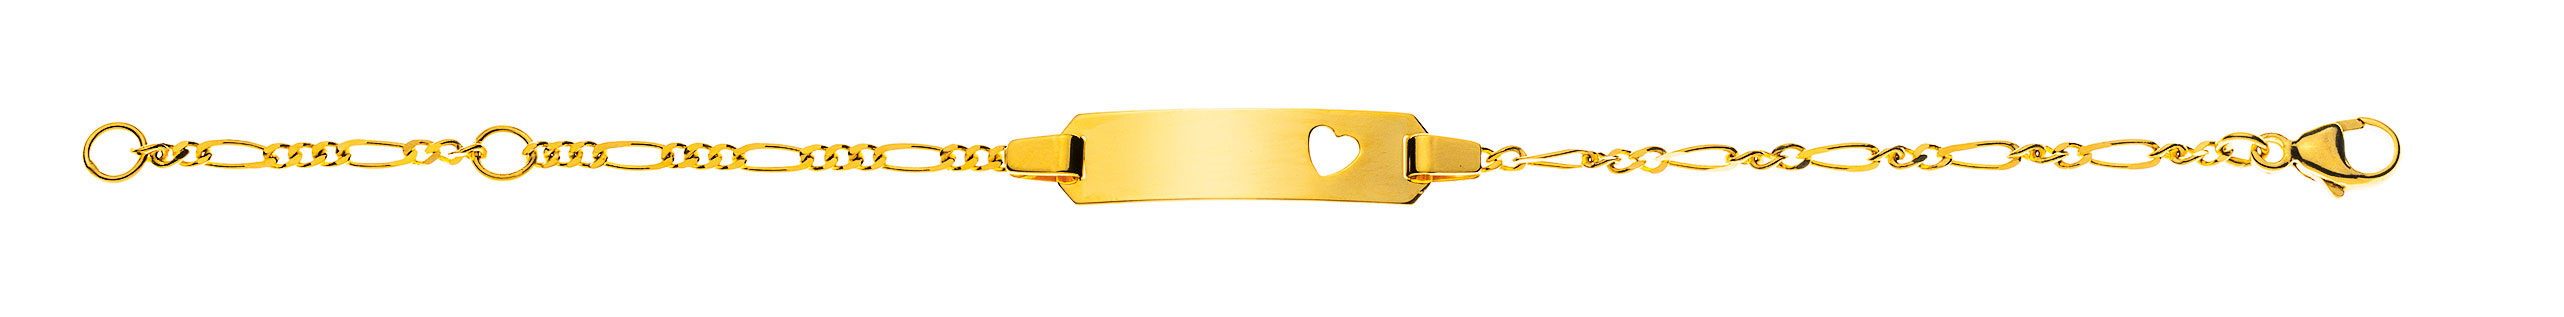 AURONOS Prestige ID-Bracelet en or jaune 18k Chaîne Figaro diamantée 14cm